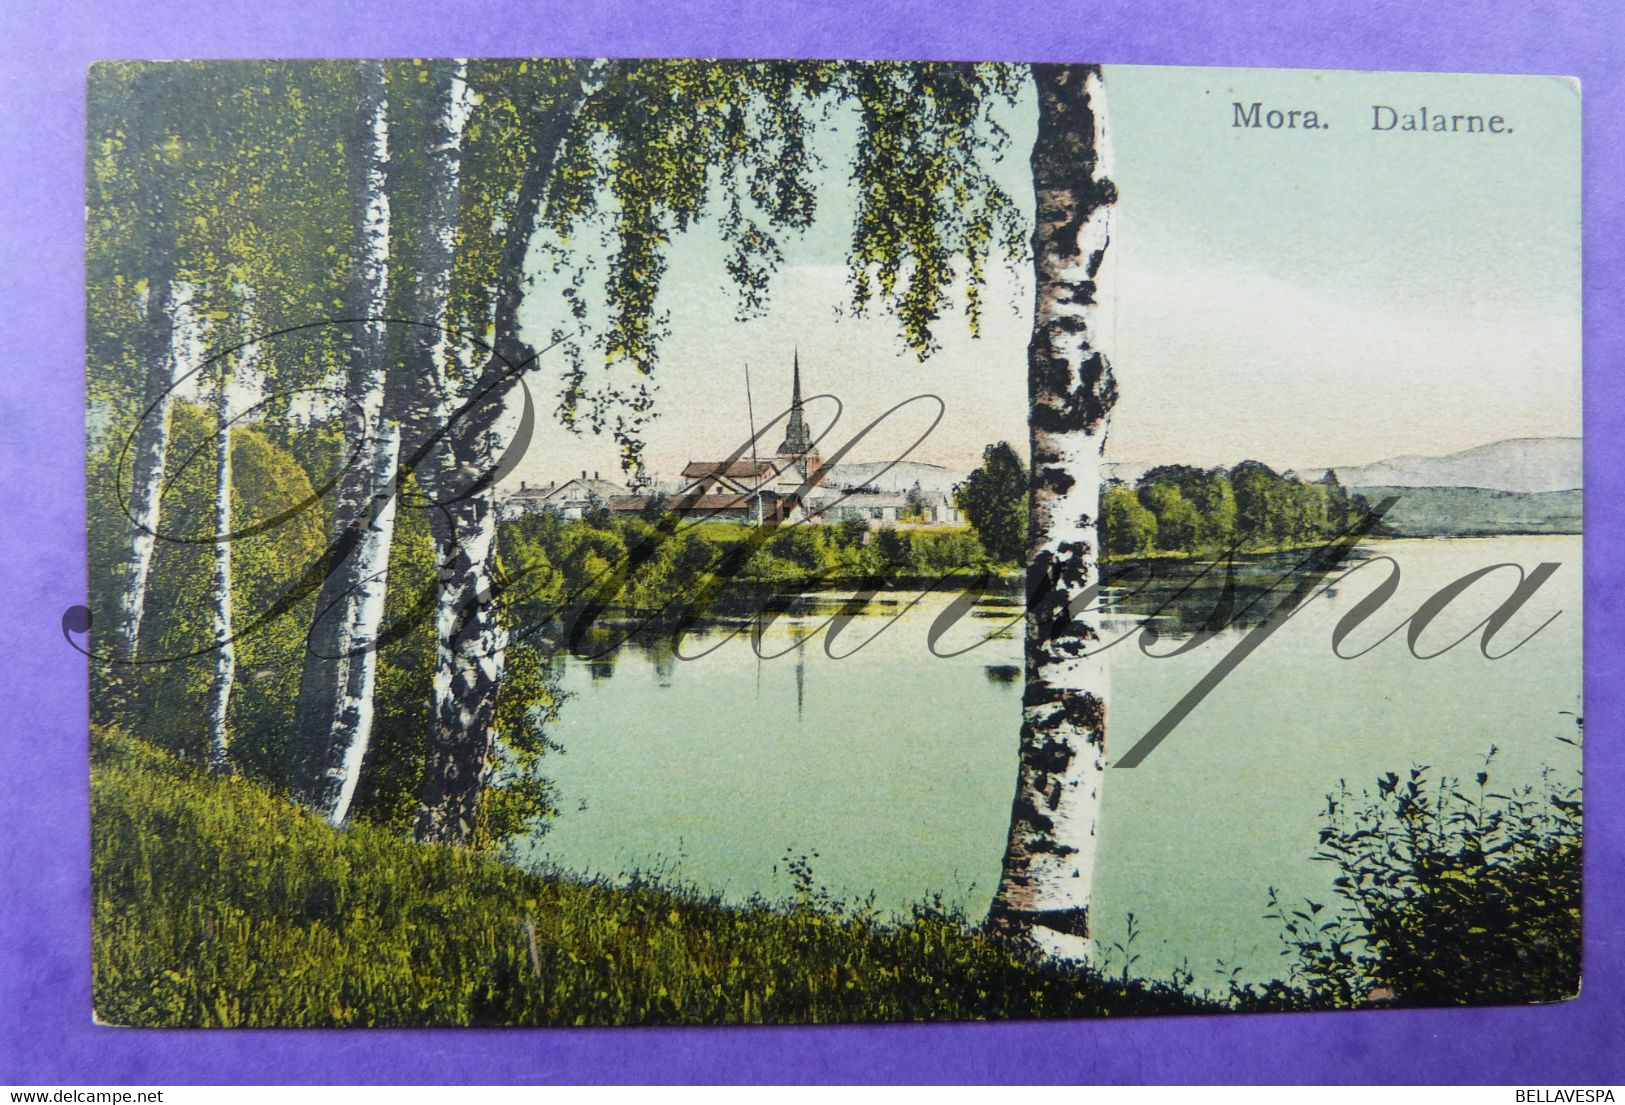 Mora Sverige Dalarne. Colore Ed. Cr 267 C.N. Stockholm - Zweden